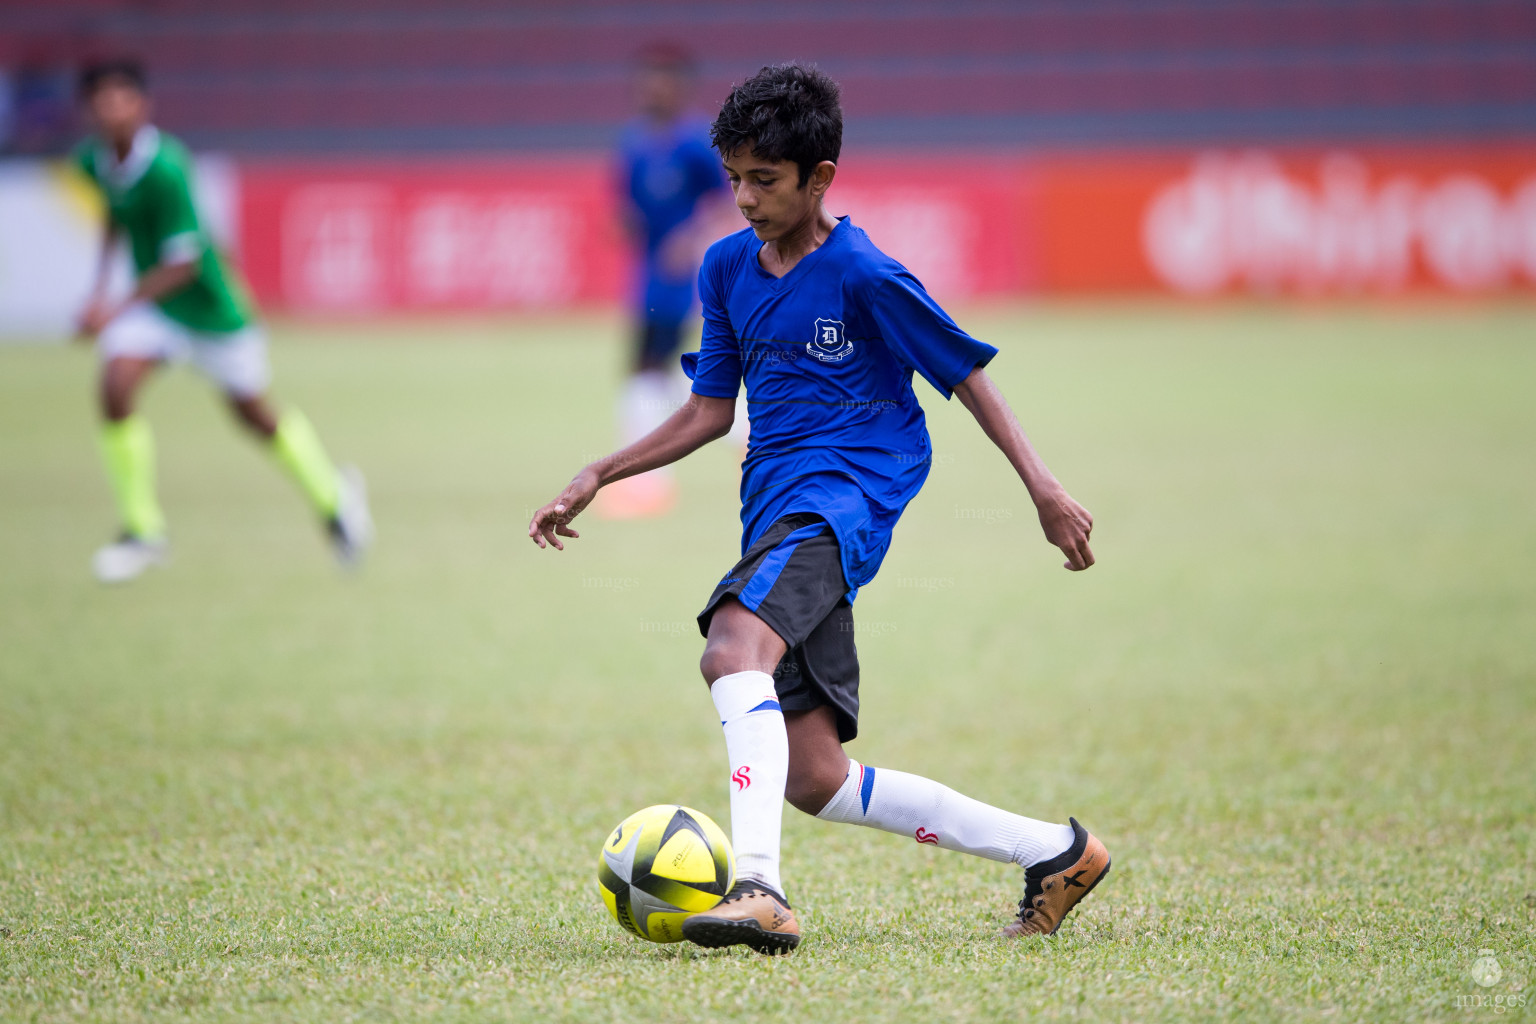 Dharumavantha School vs Gulhee School in Mamen Inter-School Football Tournament 2019 (U15) on 26th February 2019, Monday in Male' Maldives